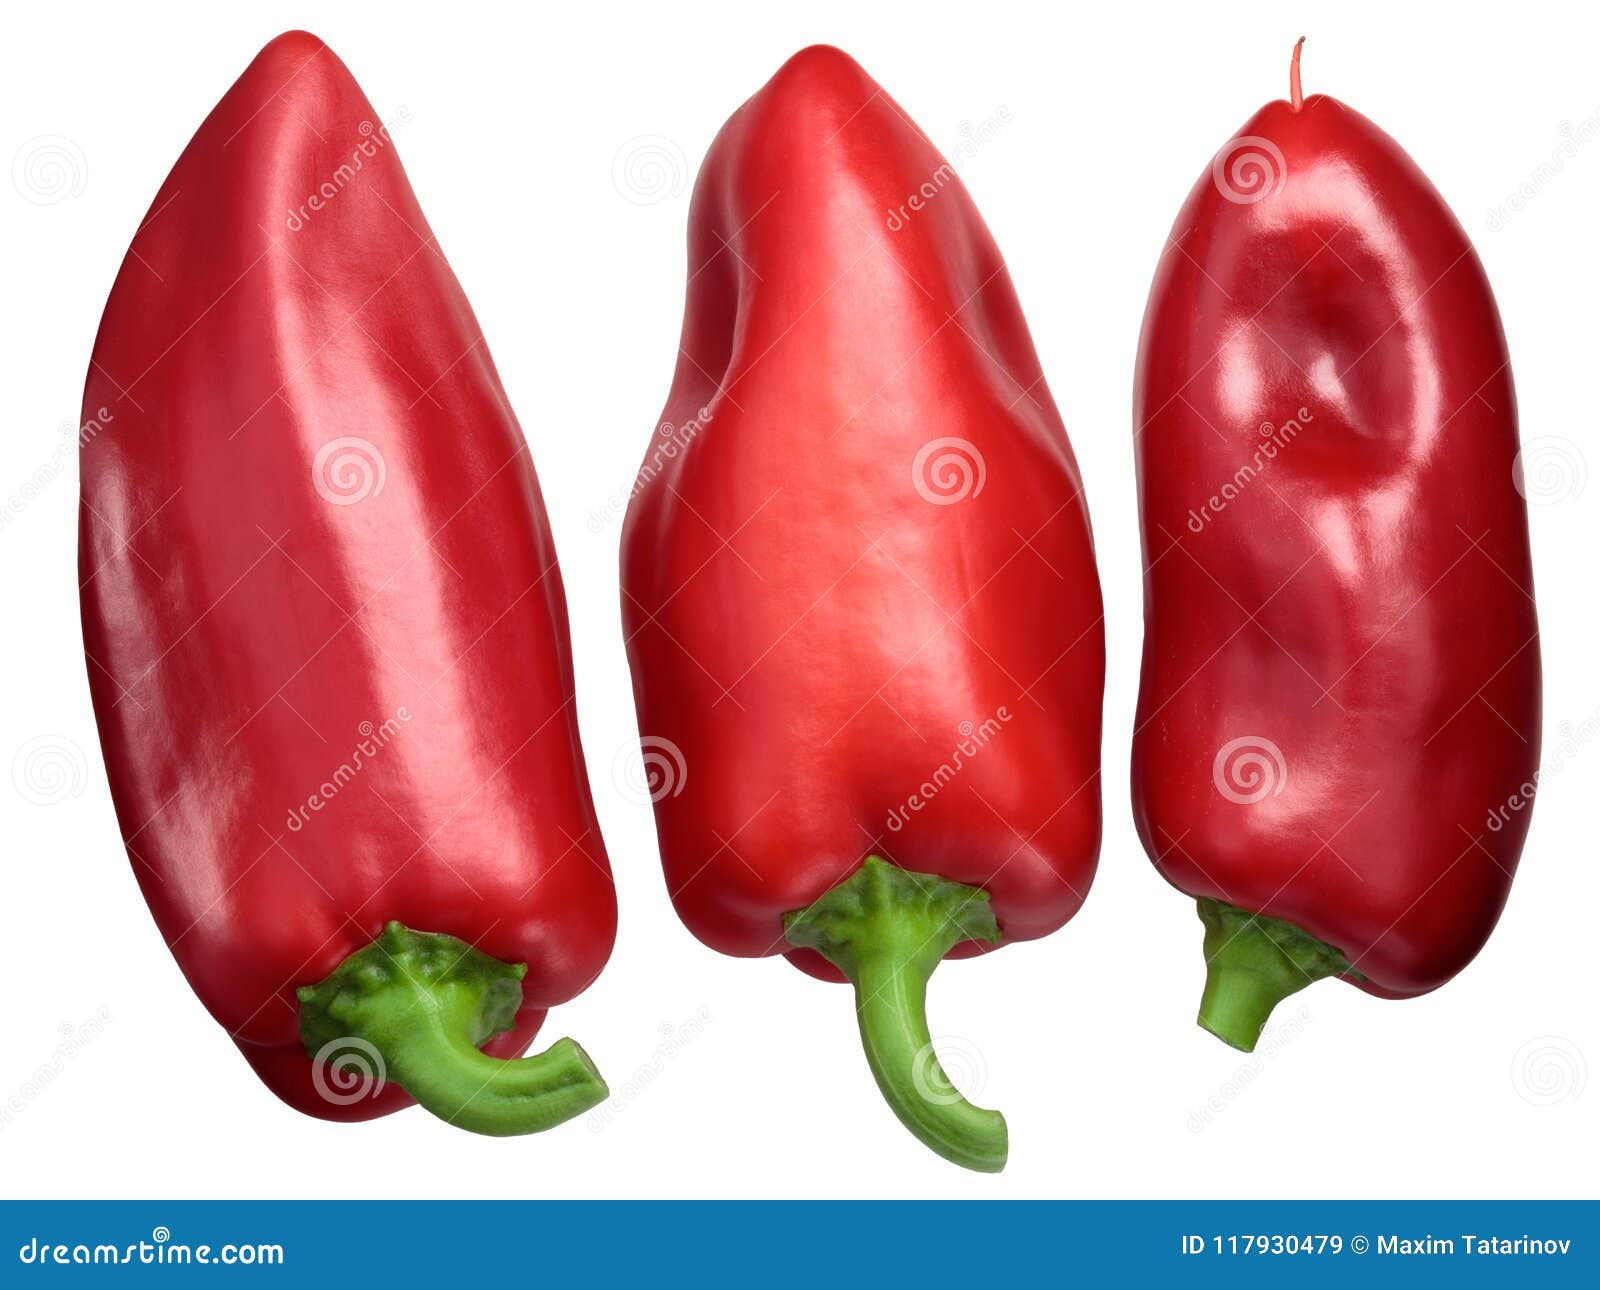 red bell peppers grueso de plaza, top